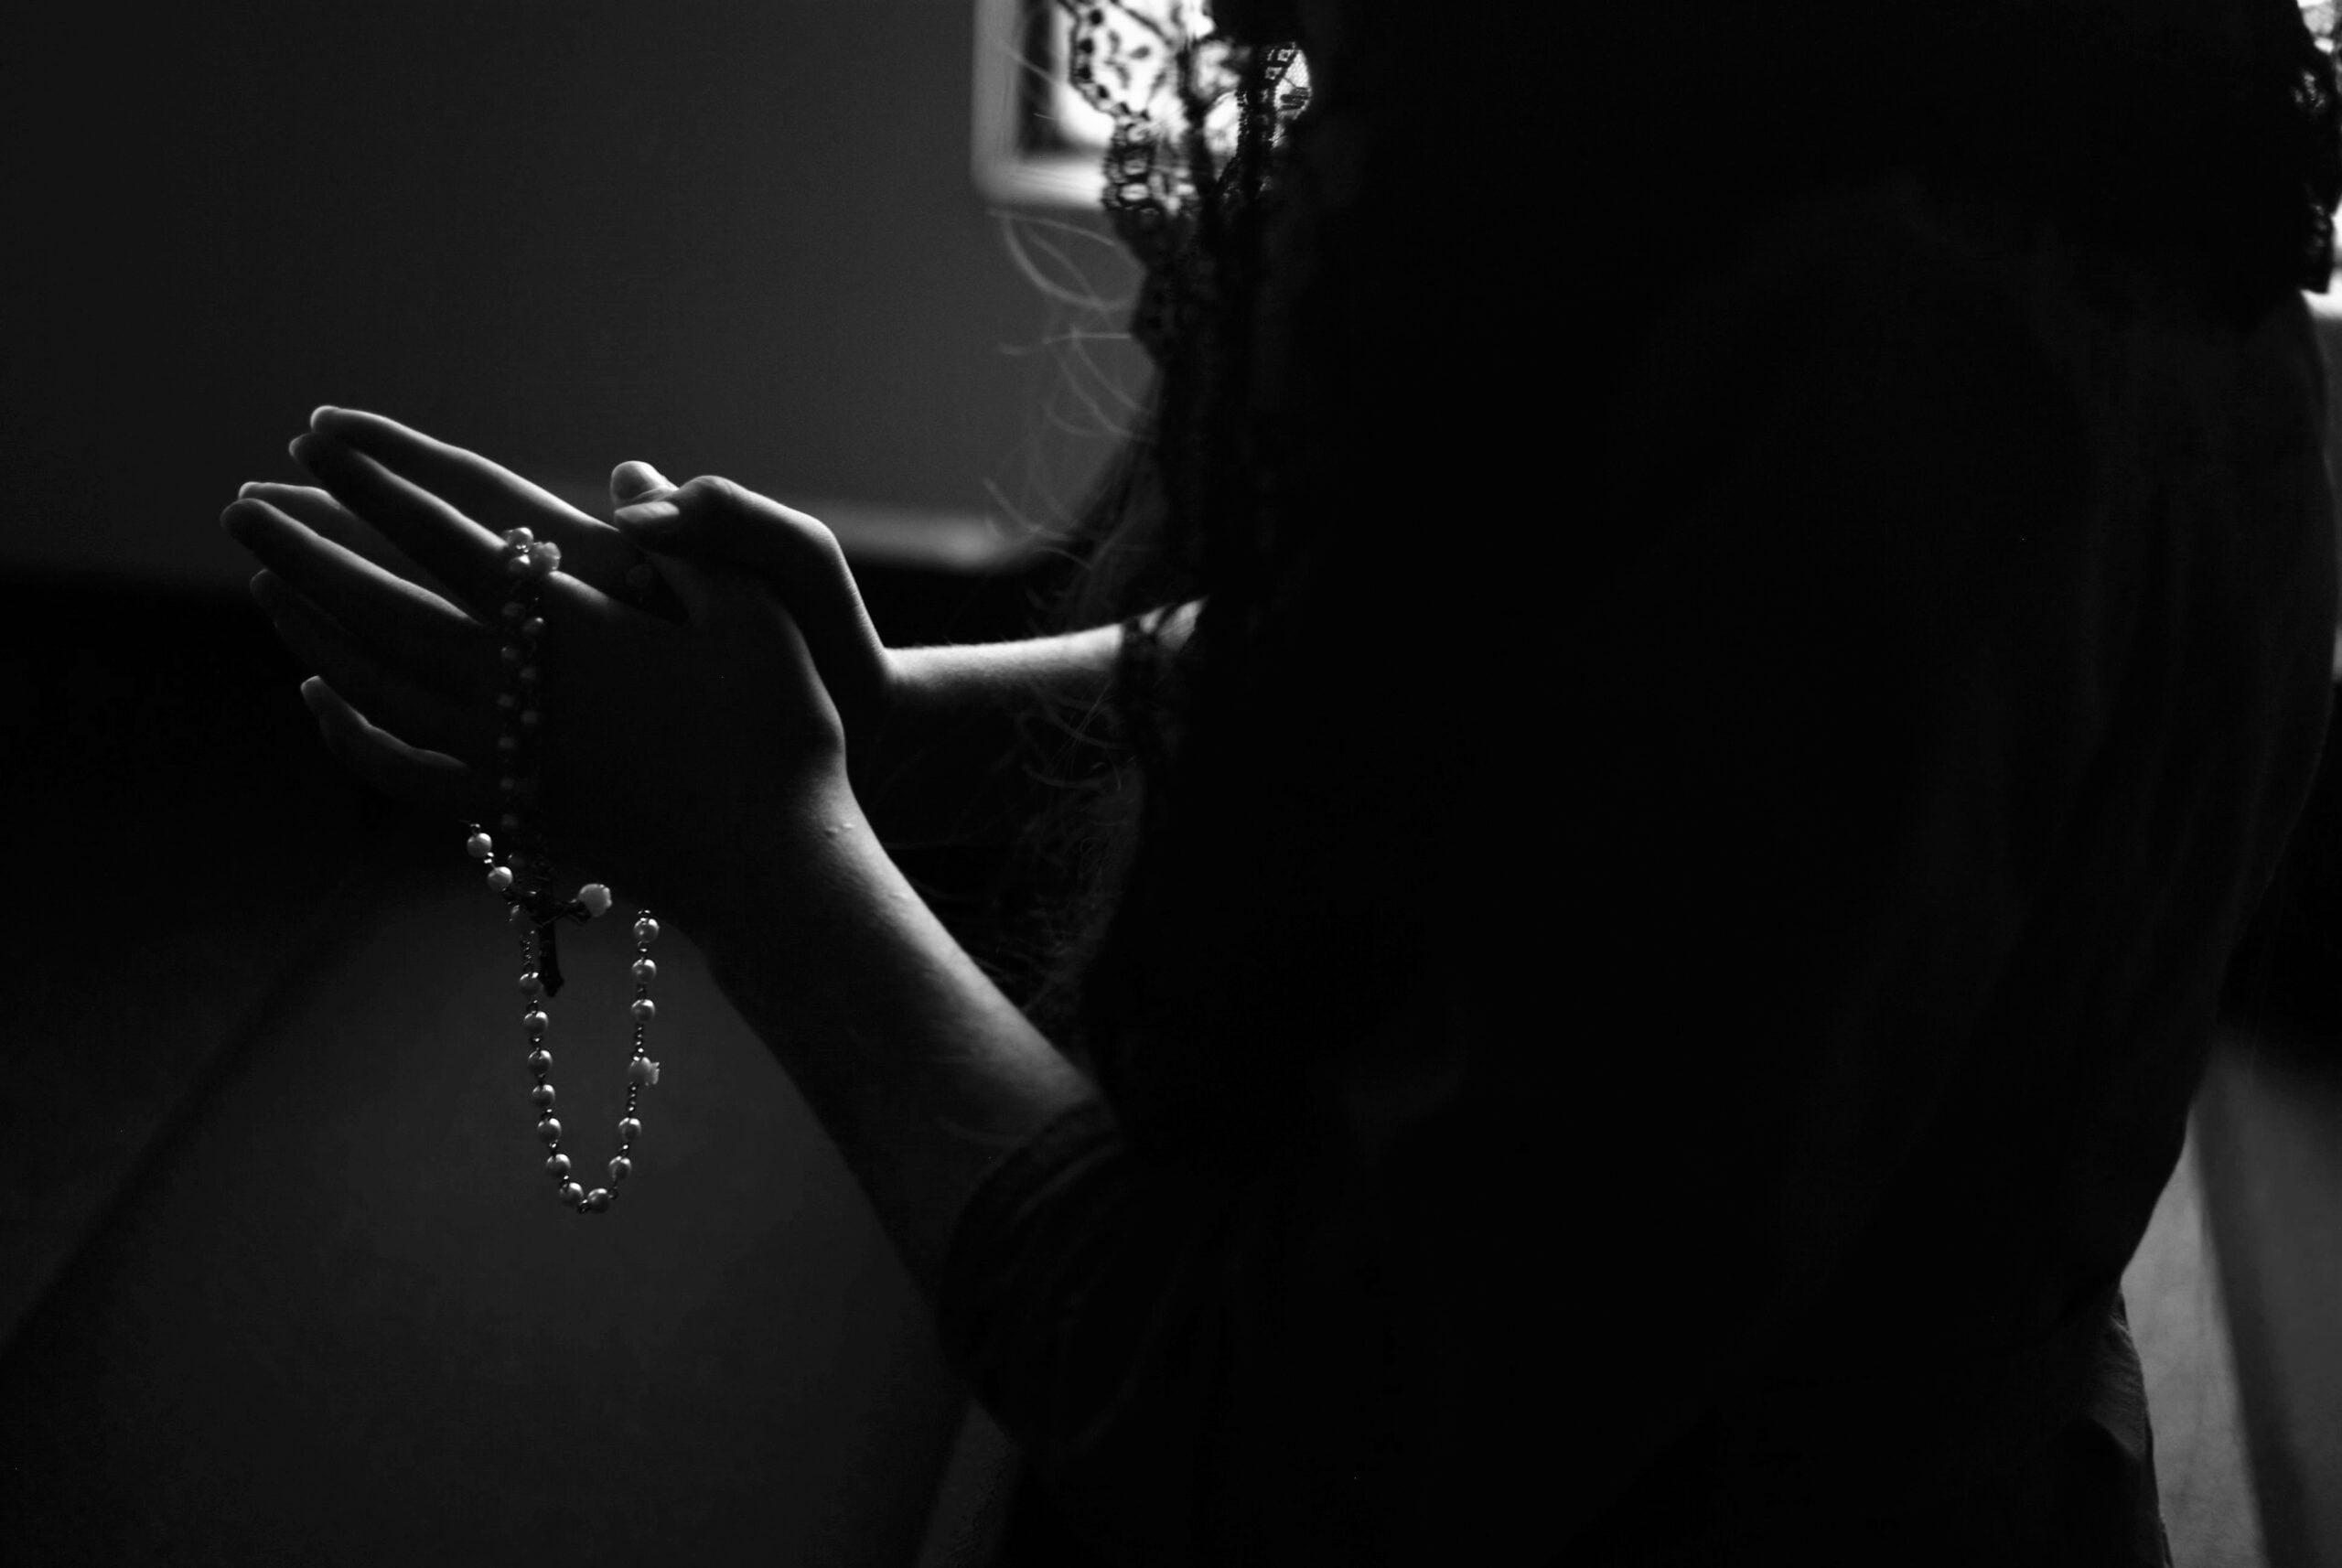 Sanatan Religion, silhouette of woman holding rosary while praying